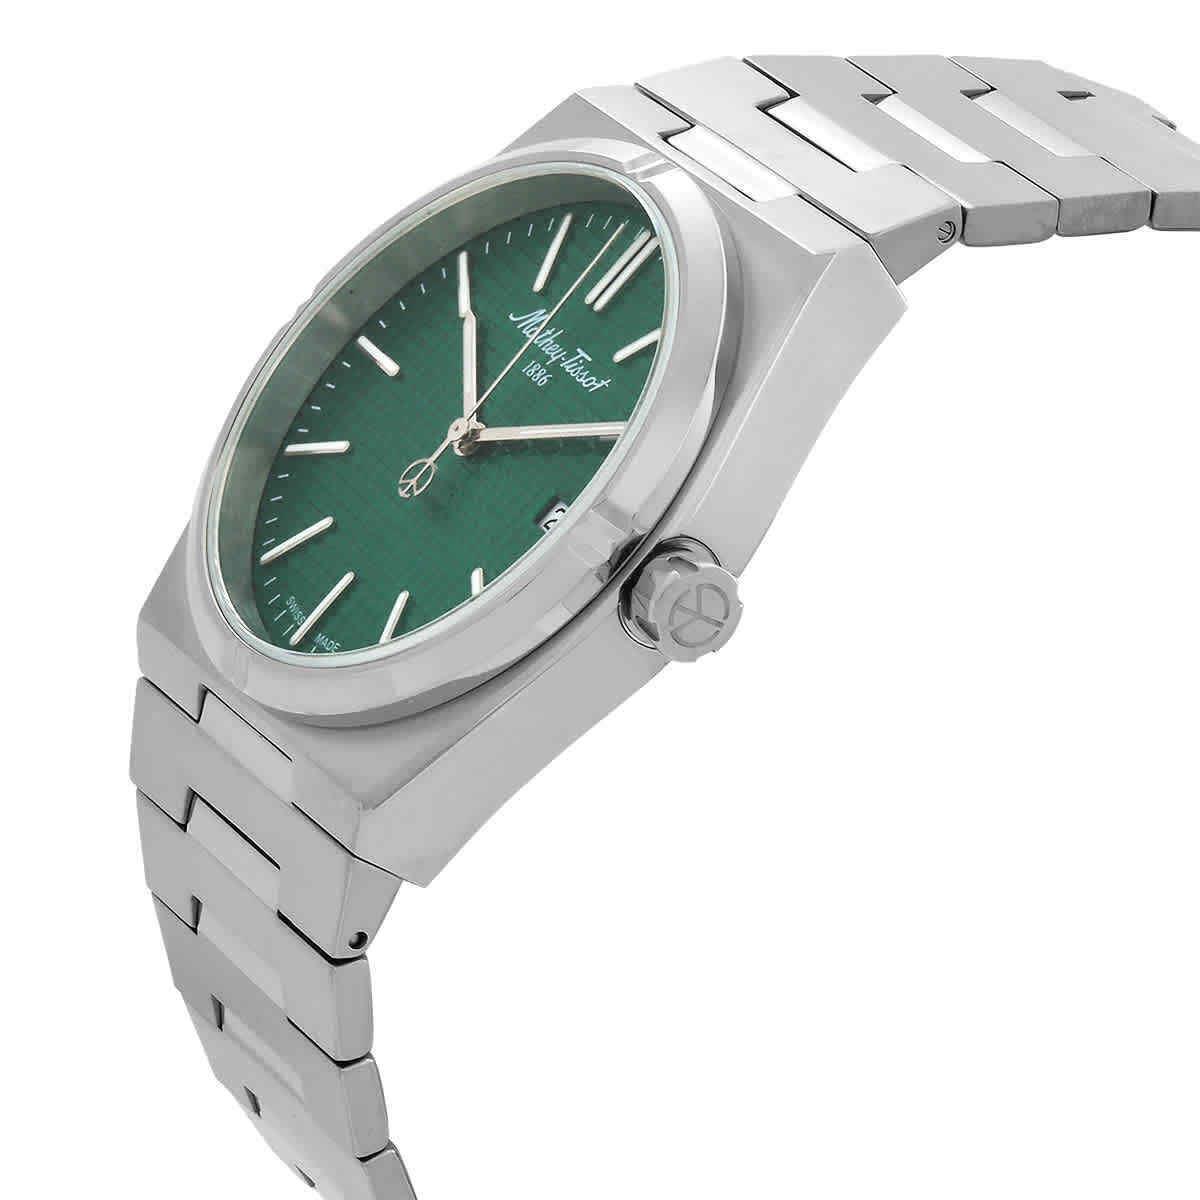 Mathey-tissot Zoltan Quartz Diamond Green Dial Men`s Watch H117AV - Dial: Green, Band: Silver-tone, Bezel: Silver-tone